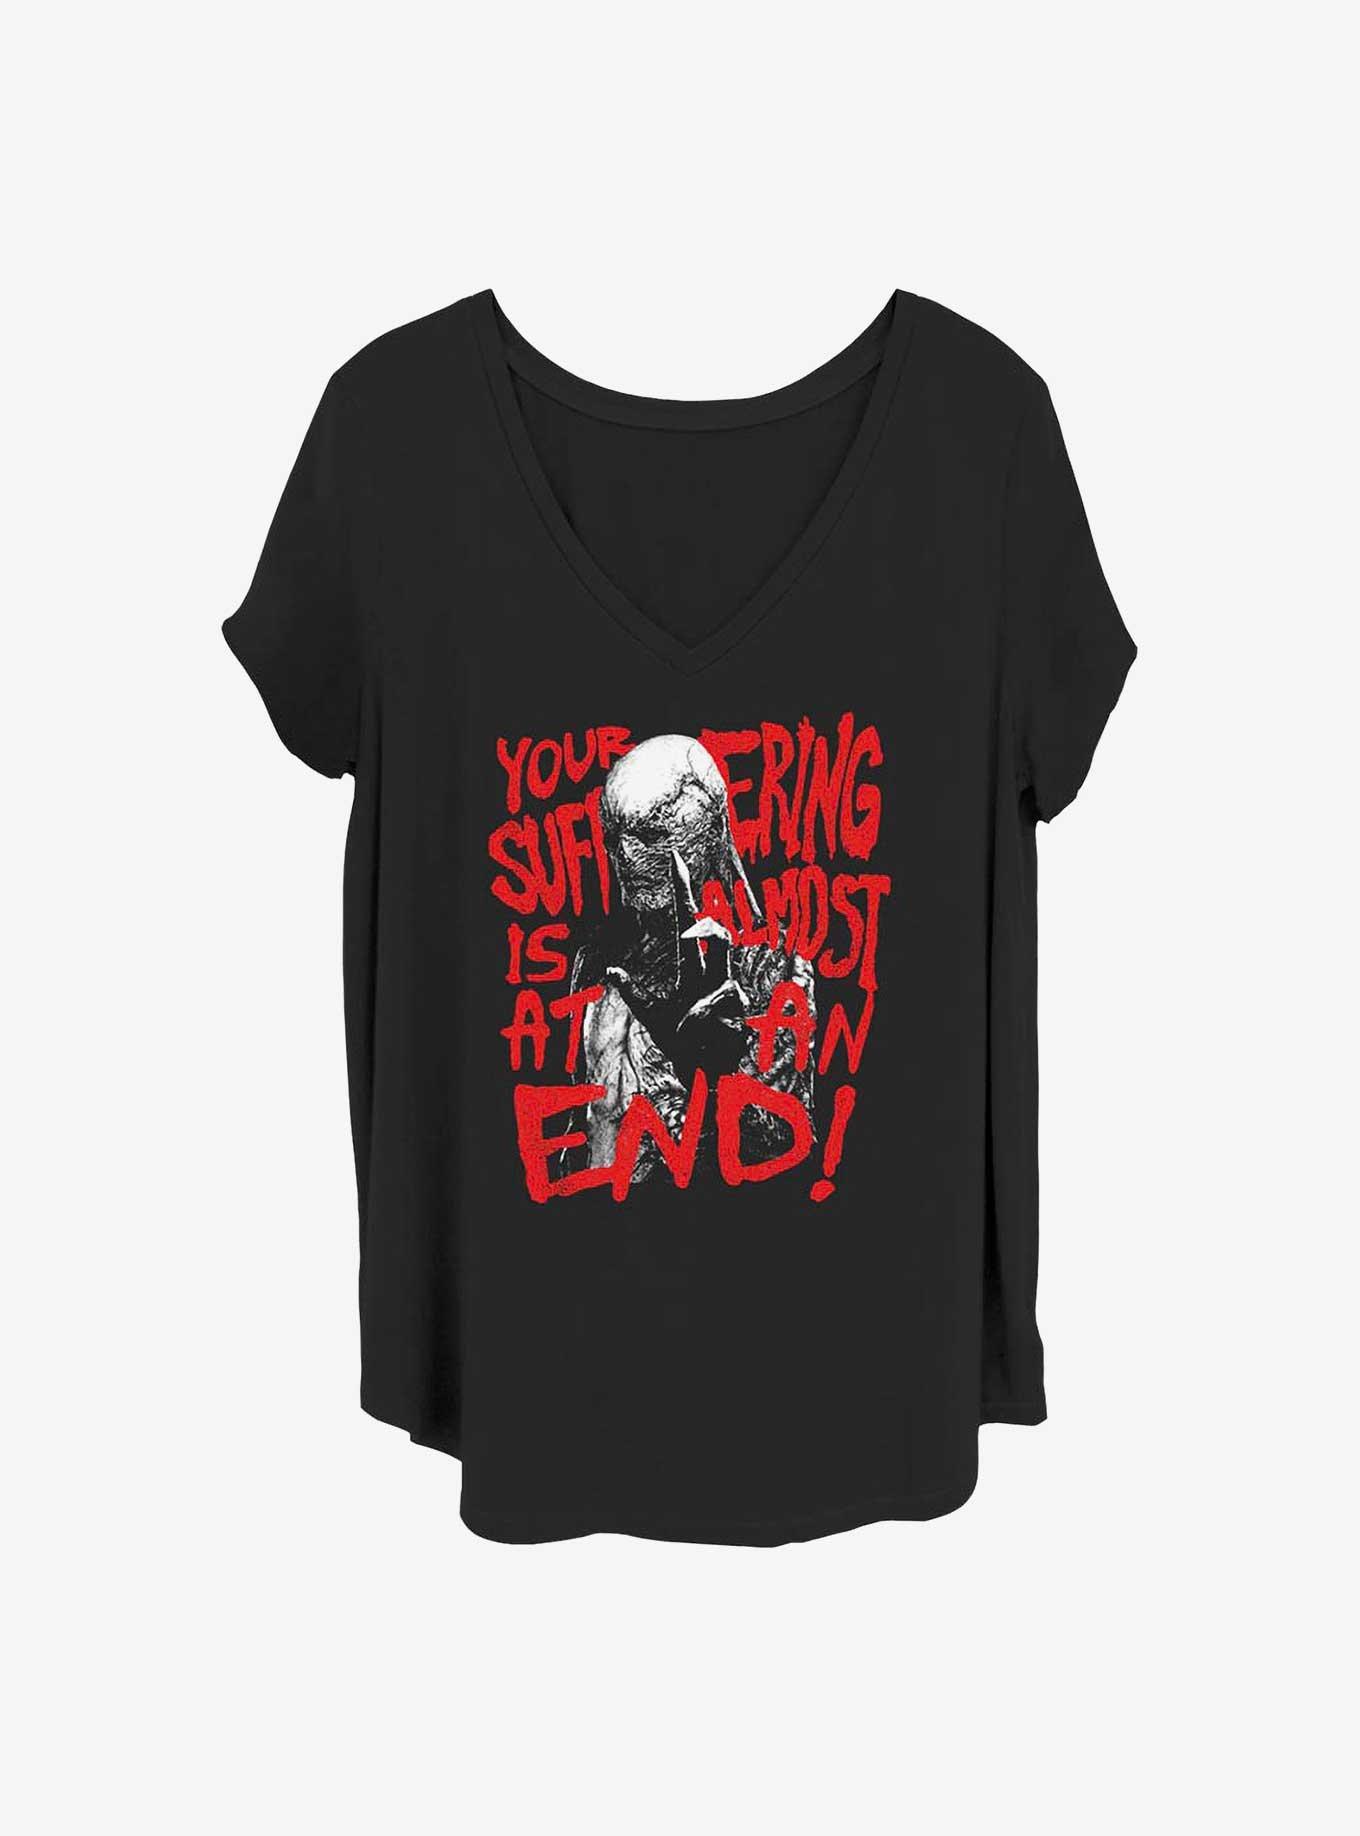 Stranger Things Vecna Your Suffering Girls T-Shirt Plus